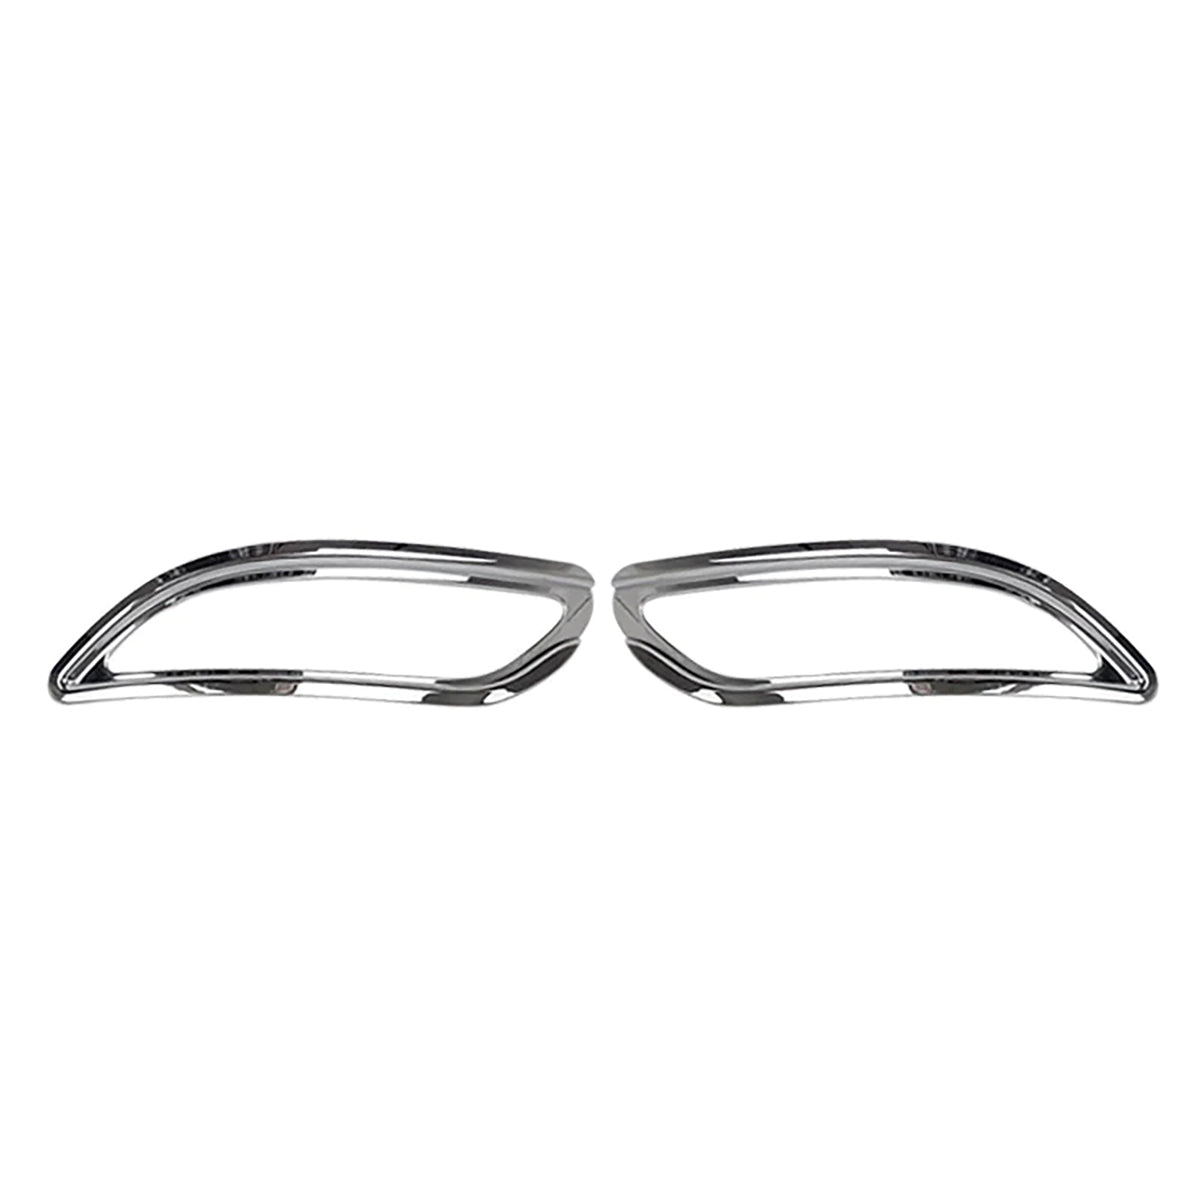 Nebelscheinwerfer Rahmen Umrandung für Hyundai i45 Chrom ABS Silber 2tlg